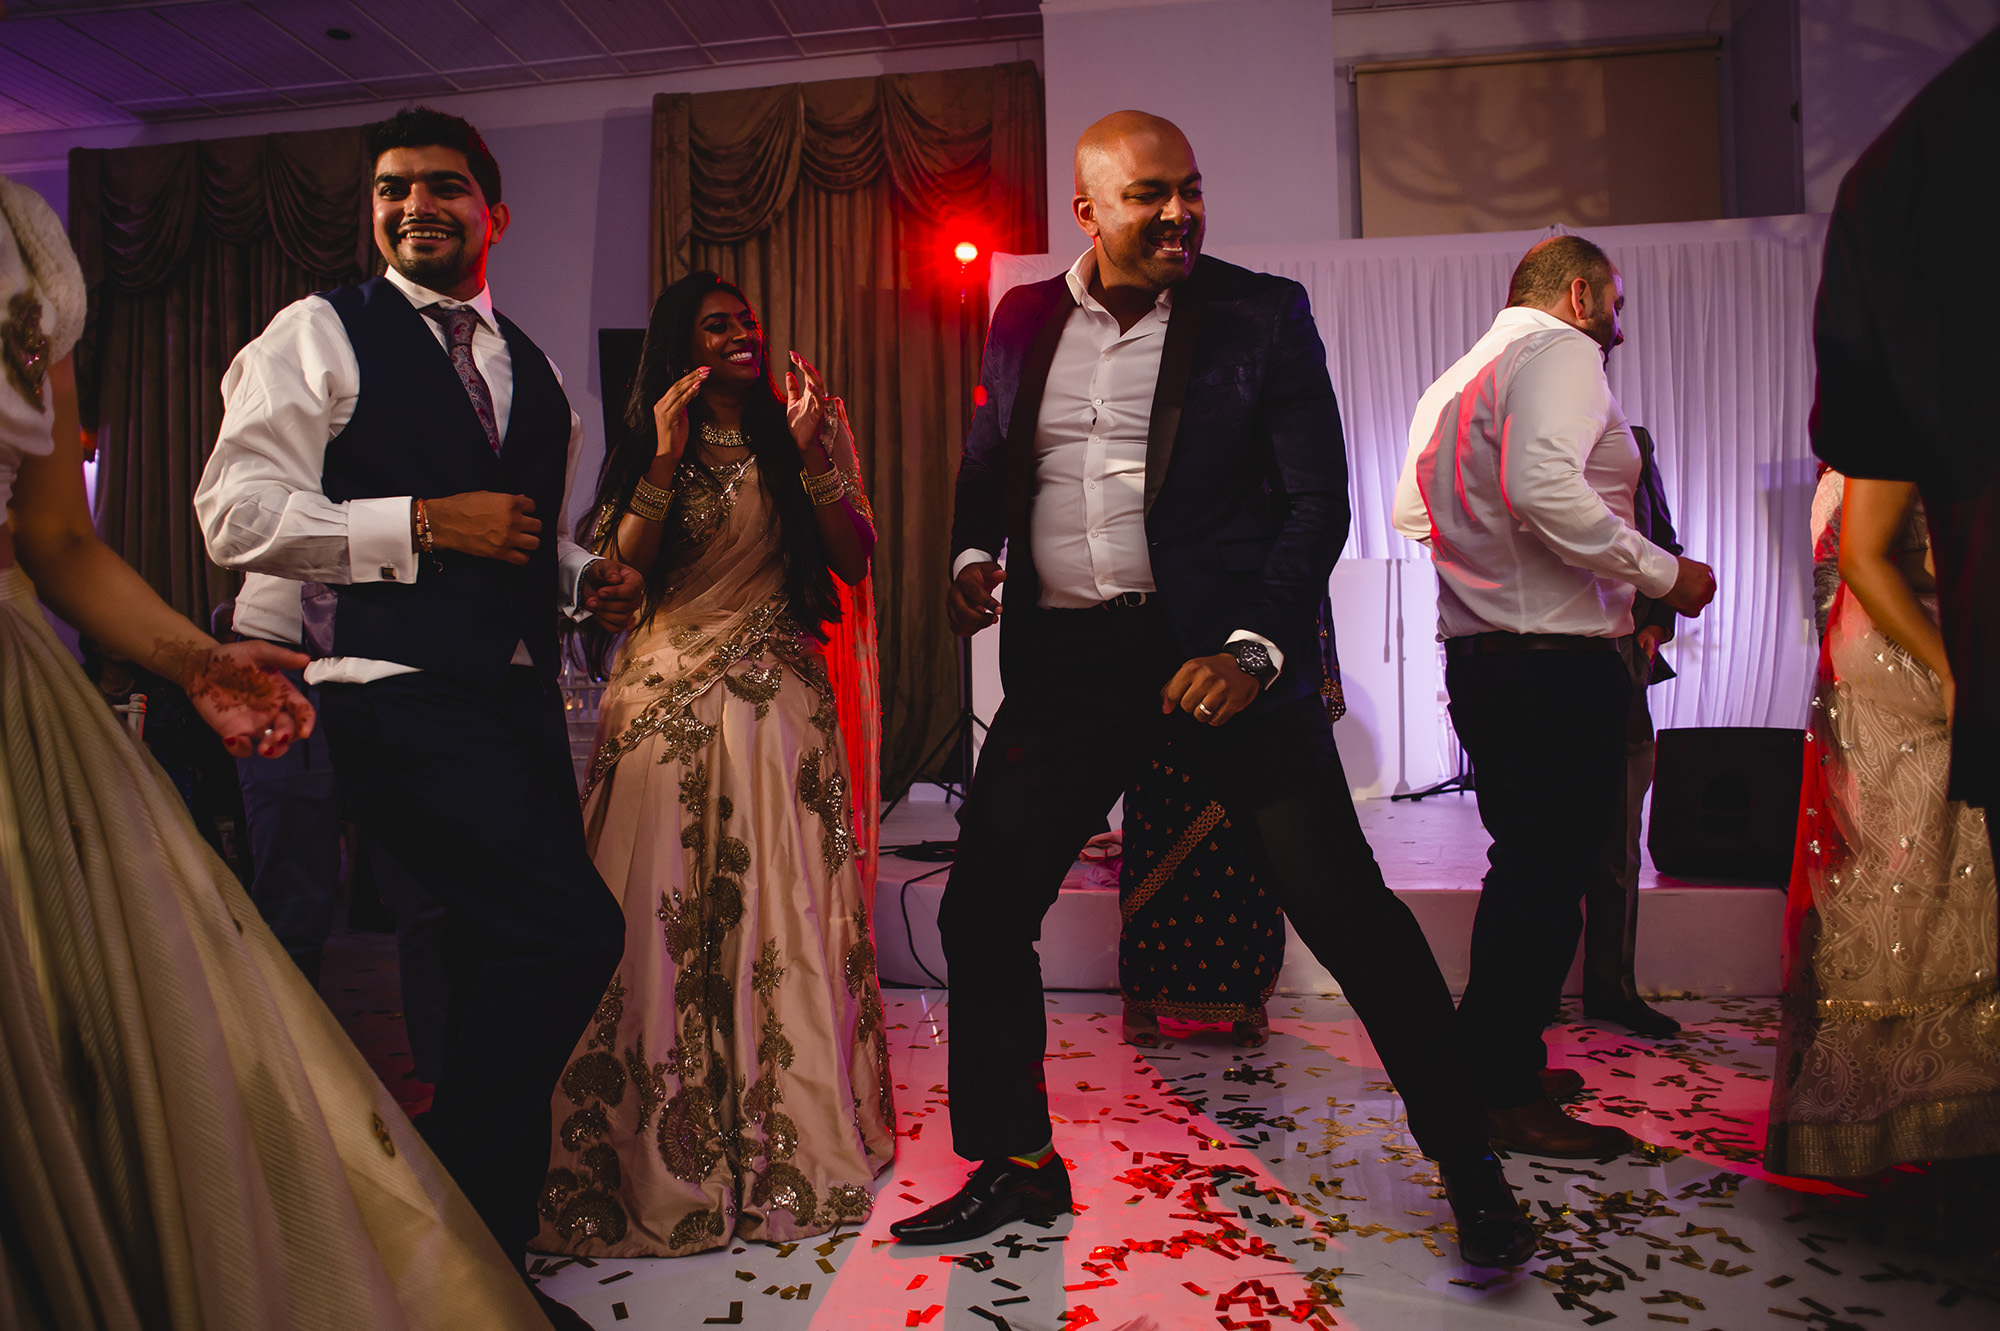 wedding guests dancing at reception	